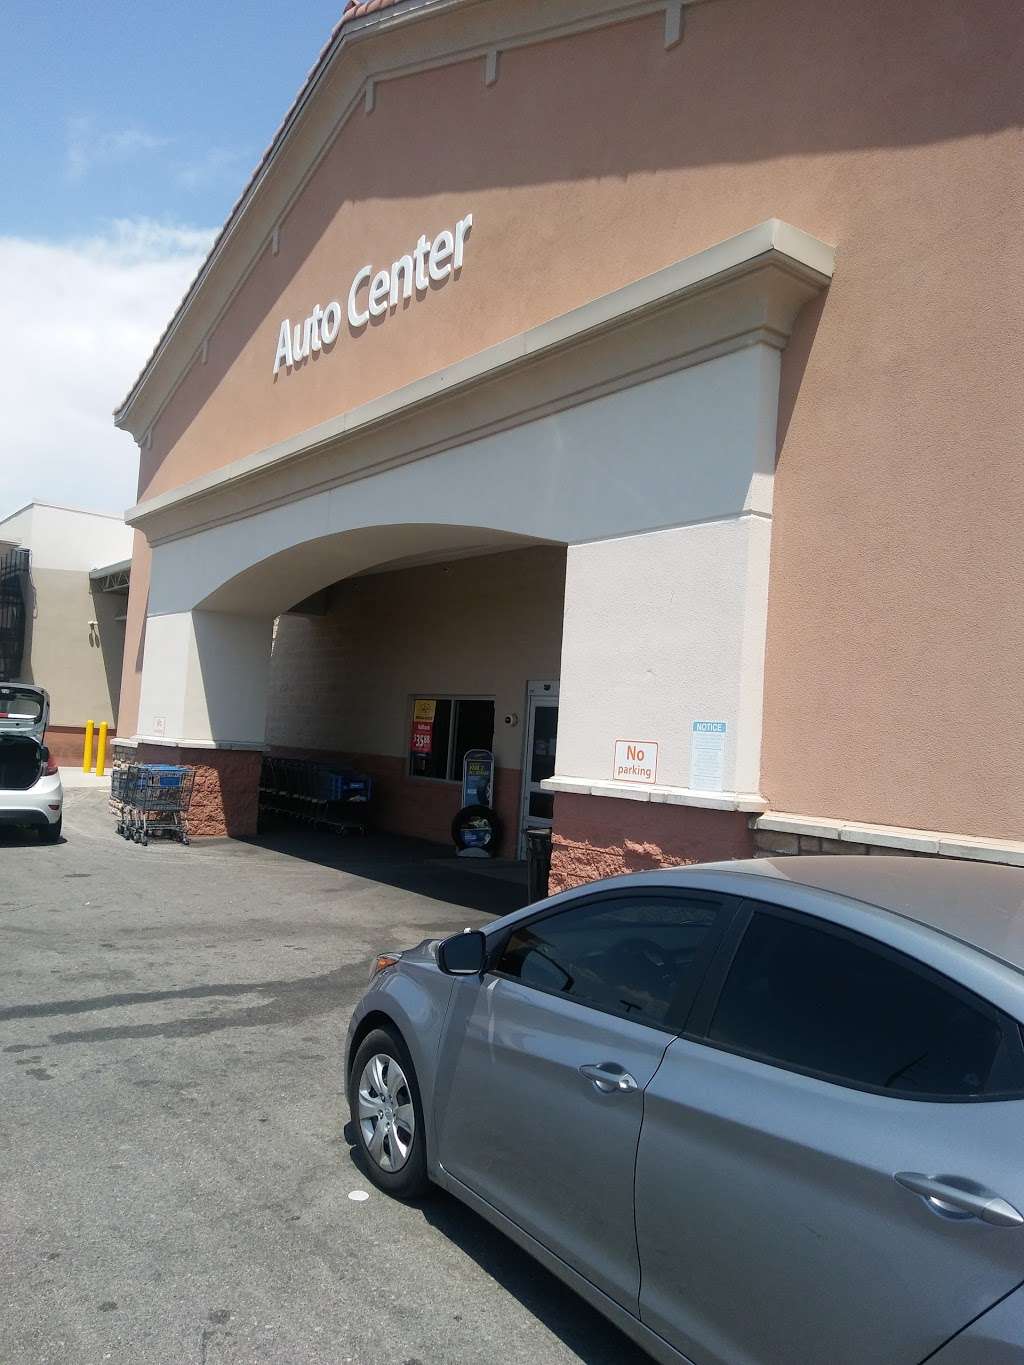 Walmart Auto Care Centers | 6464 N Decatur Blvd, Las Vegas, NV 89131, USA | Phone: (702) 515-0125